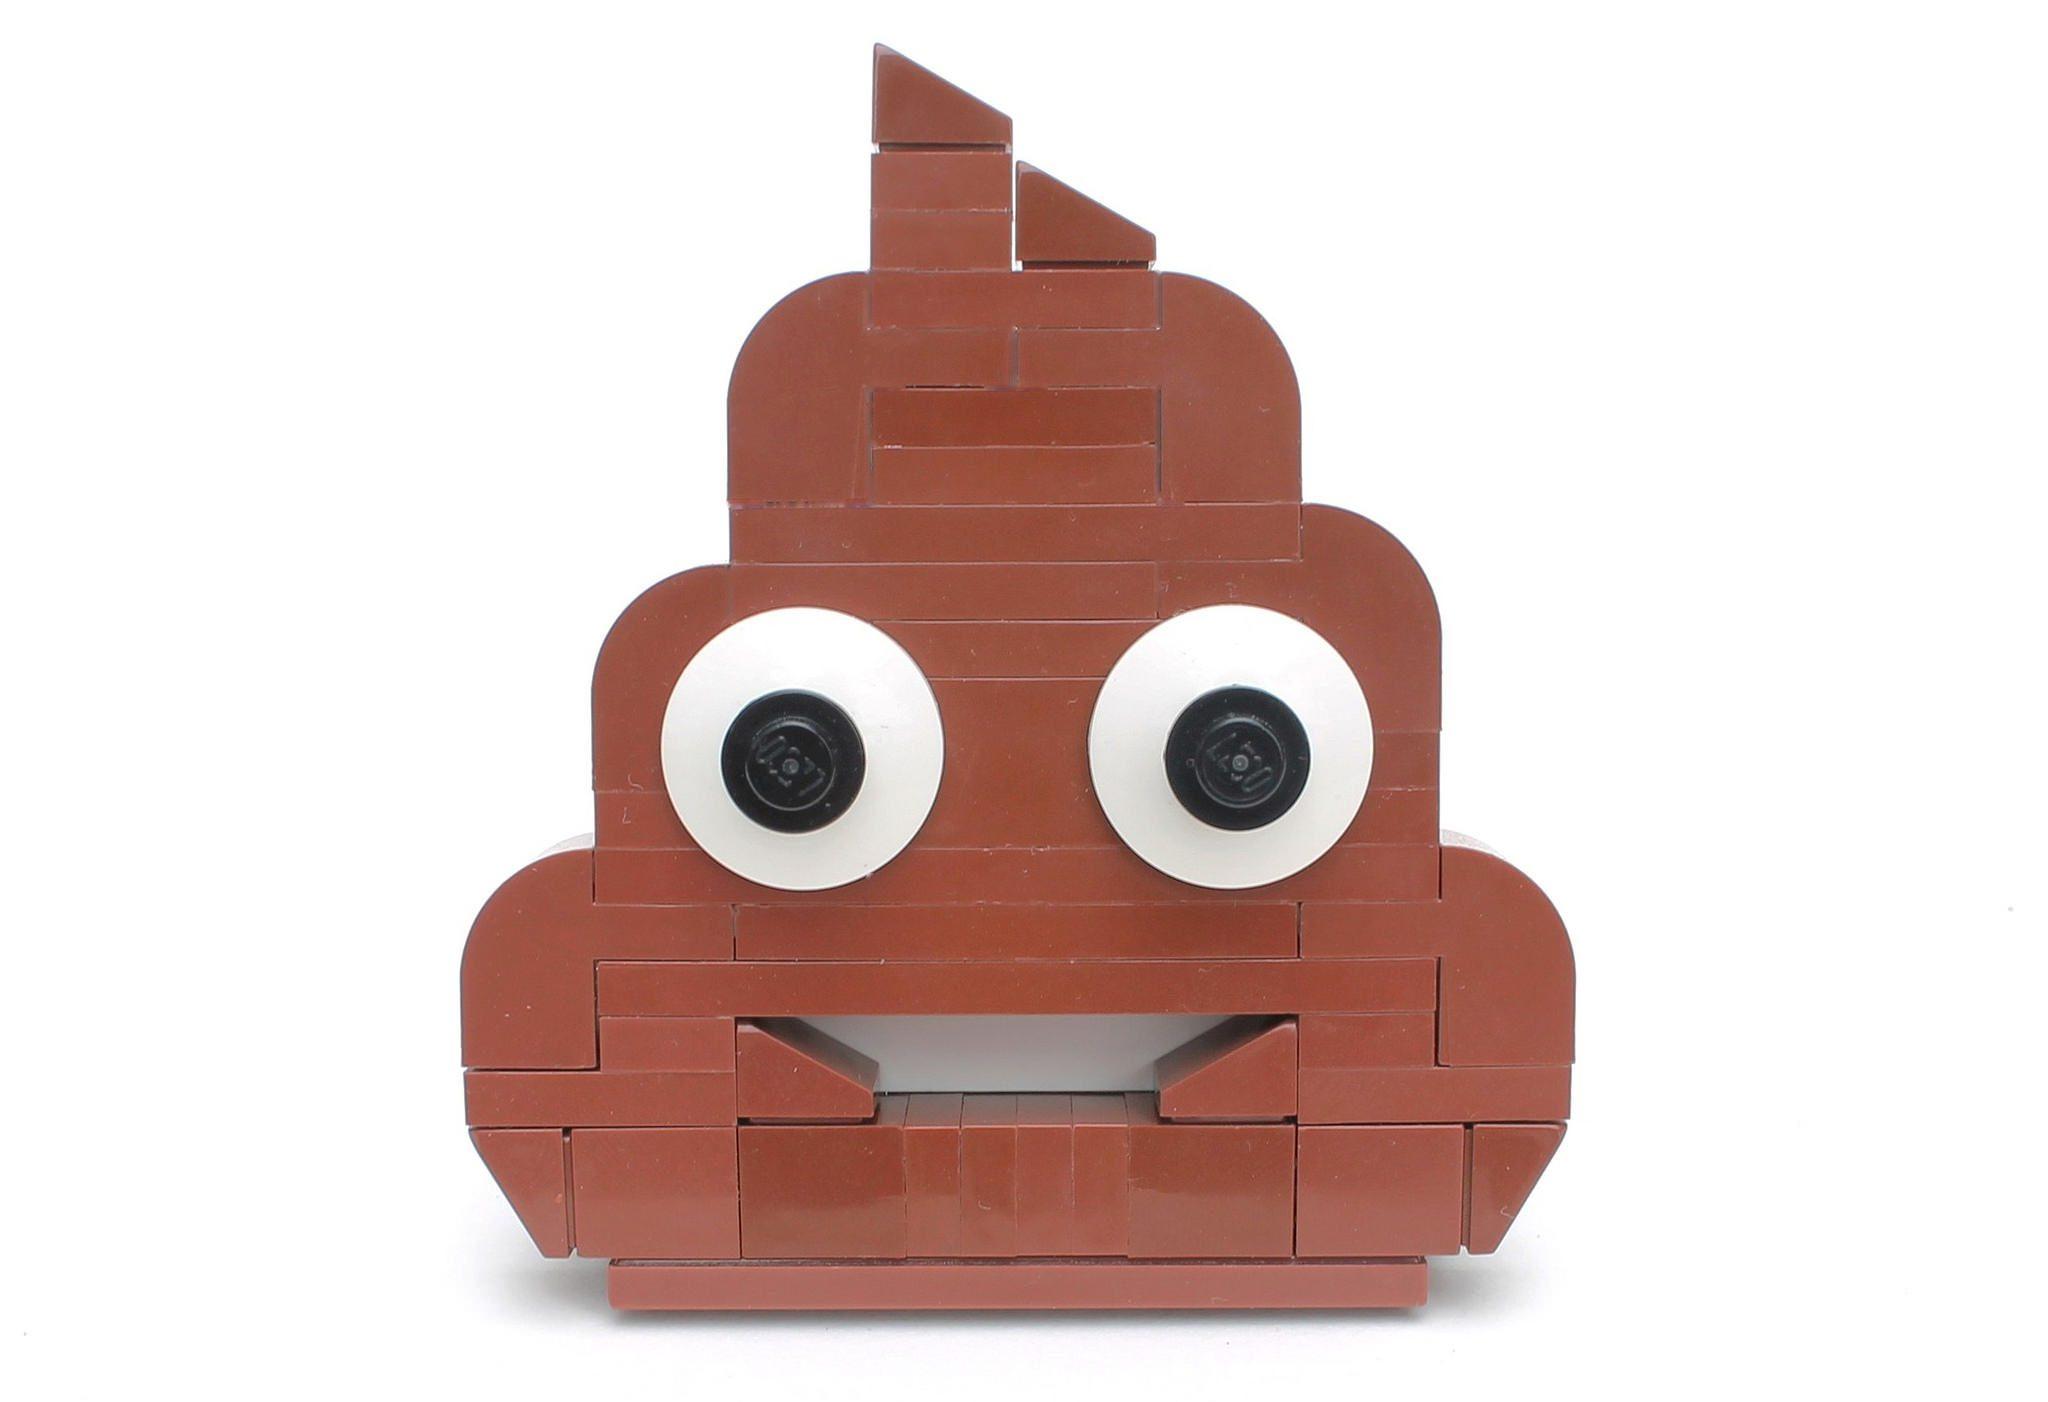 A smiling poop emoji made of Lego